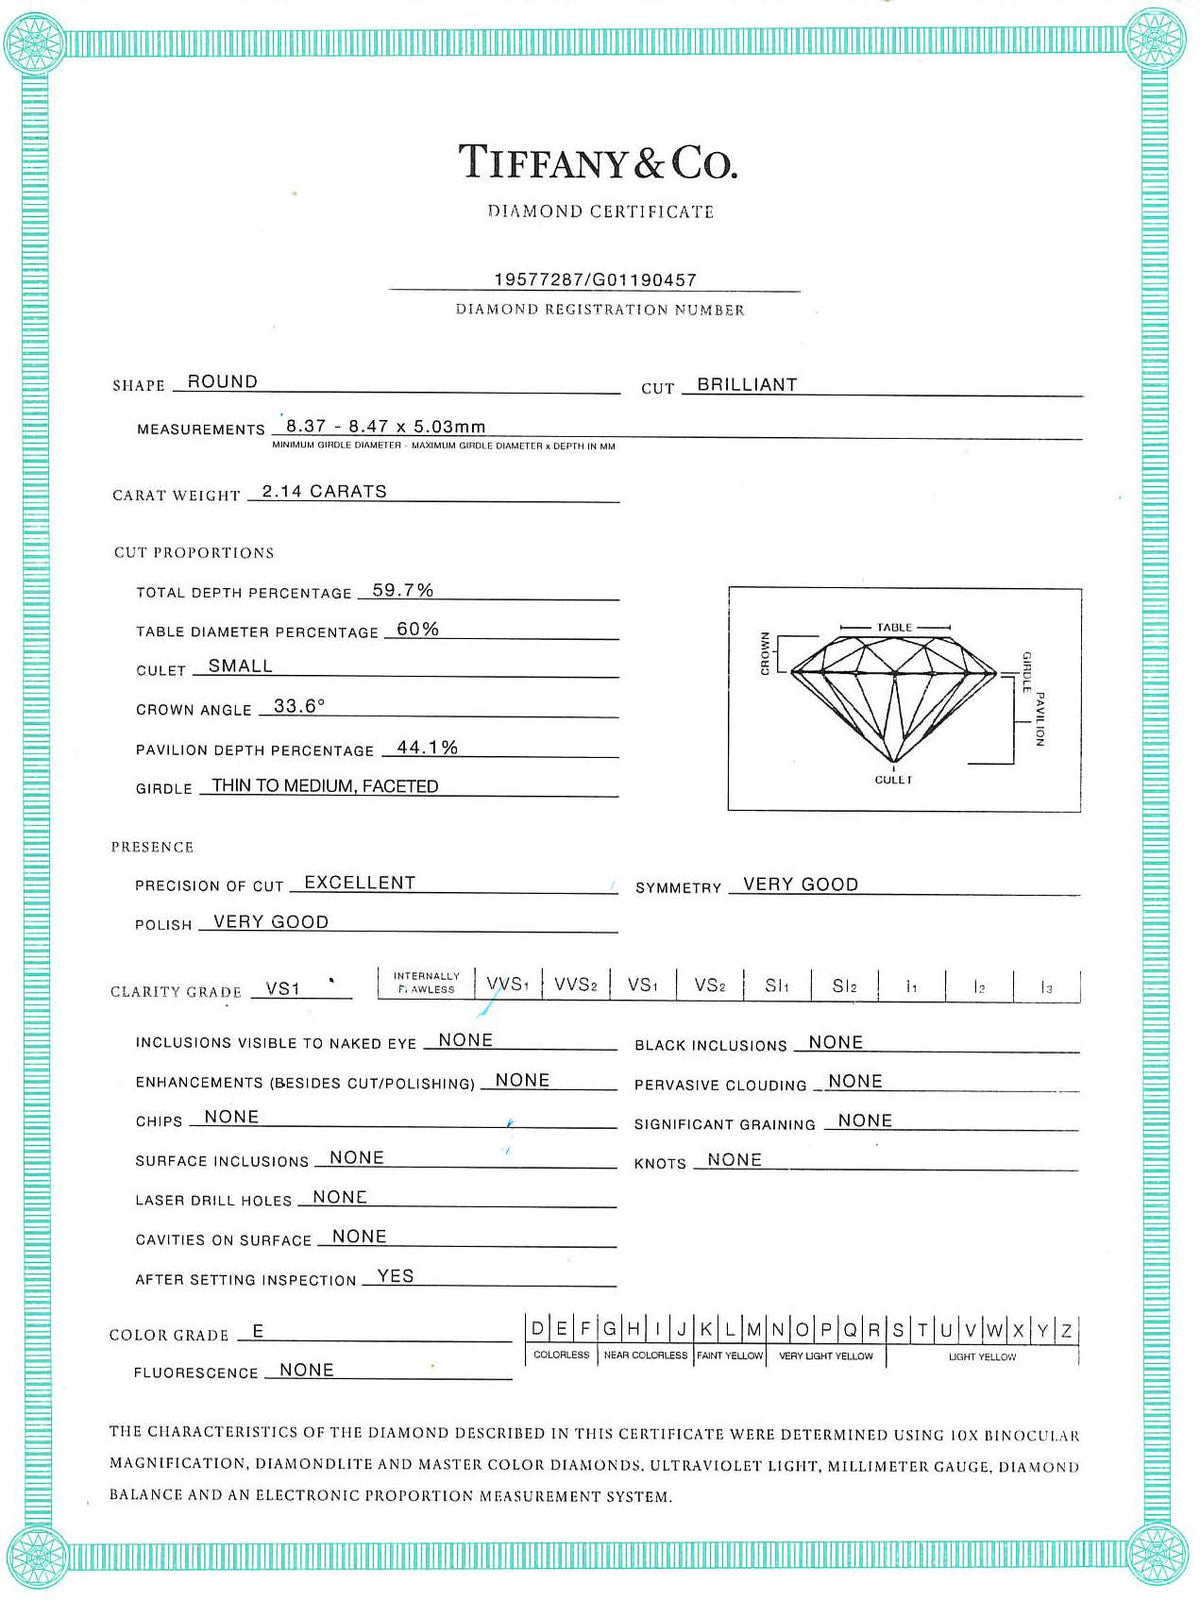 Tiffany & Co. Diamond Engagement Ring in Platinum (2.86 CTW)